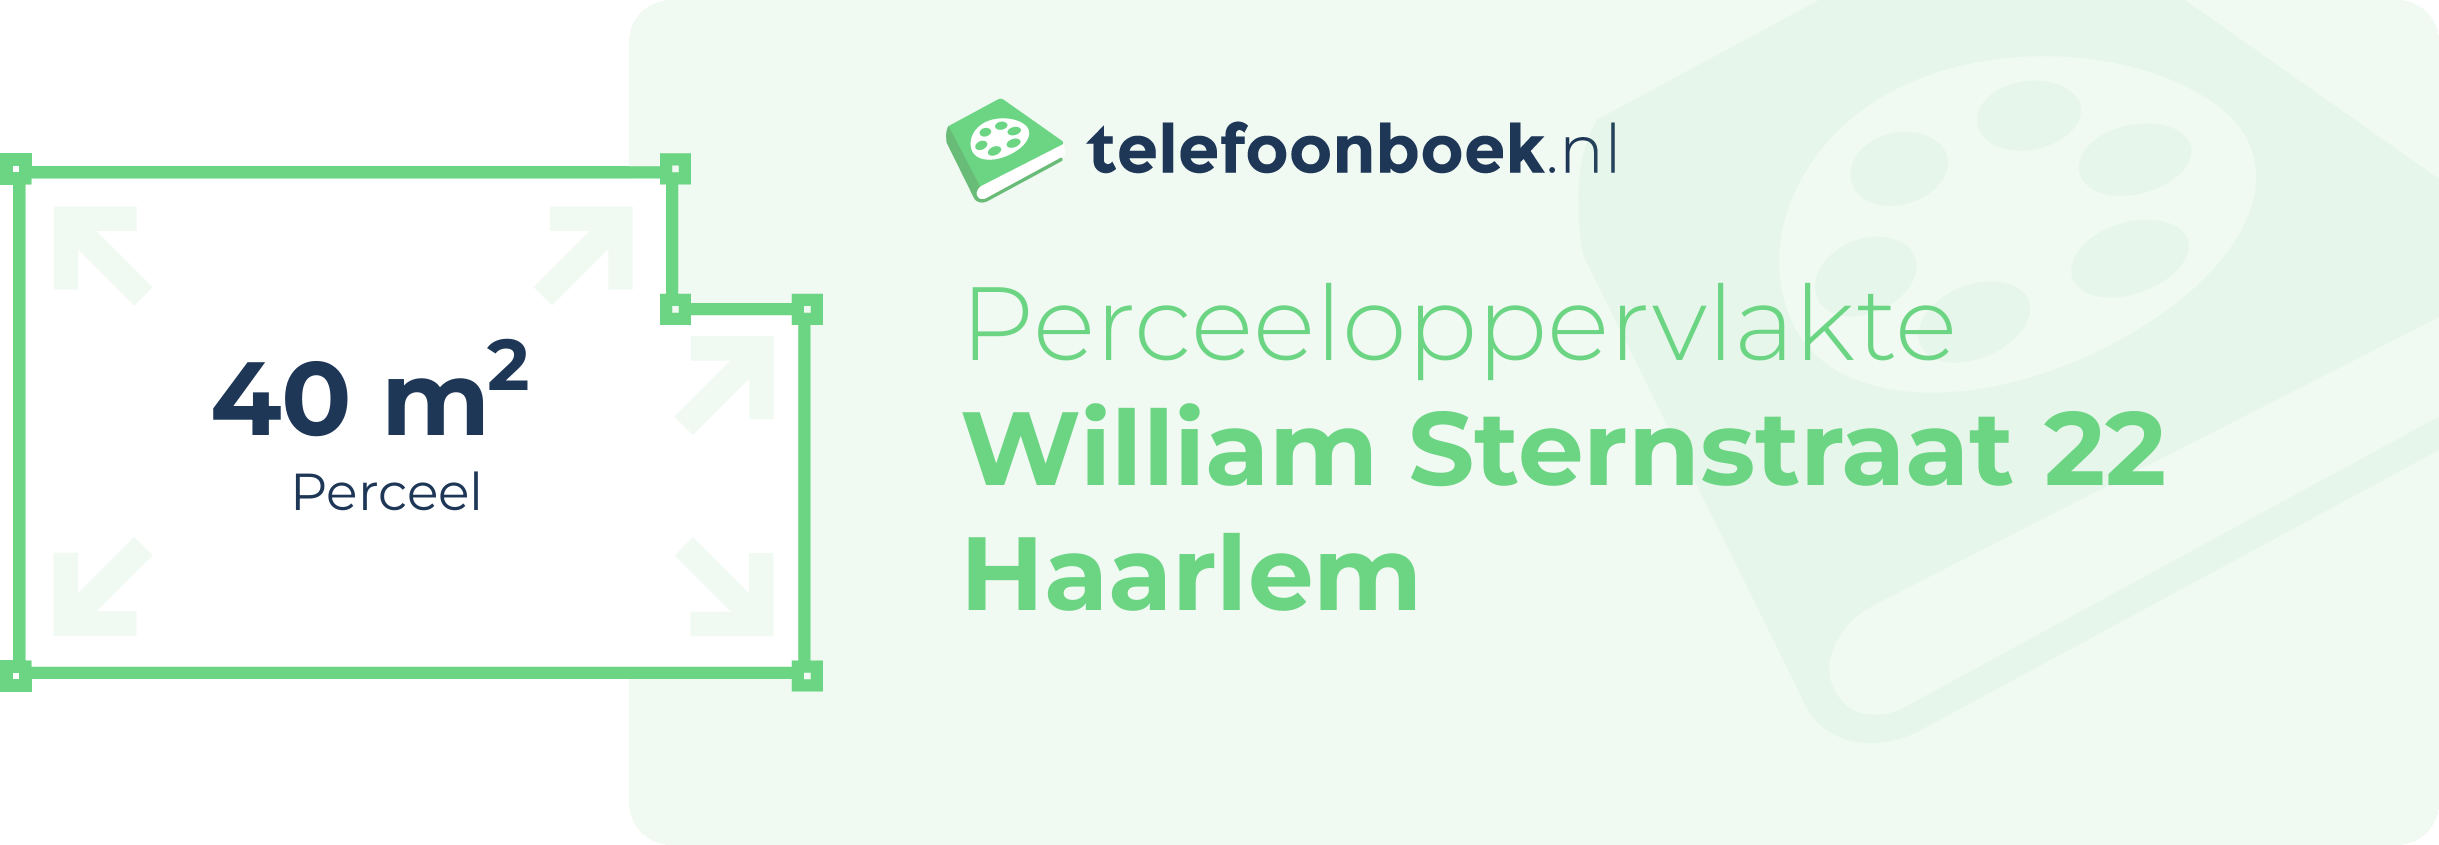 Perceeloppervlakte William Sternstraat 22 Haarlem